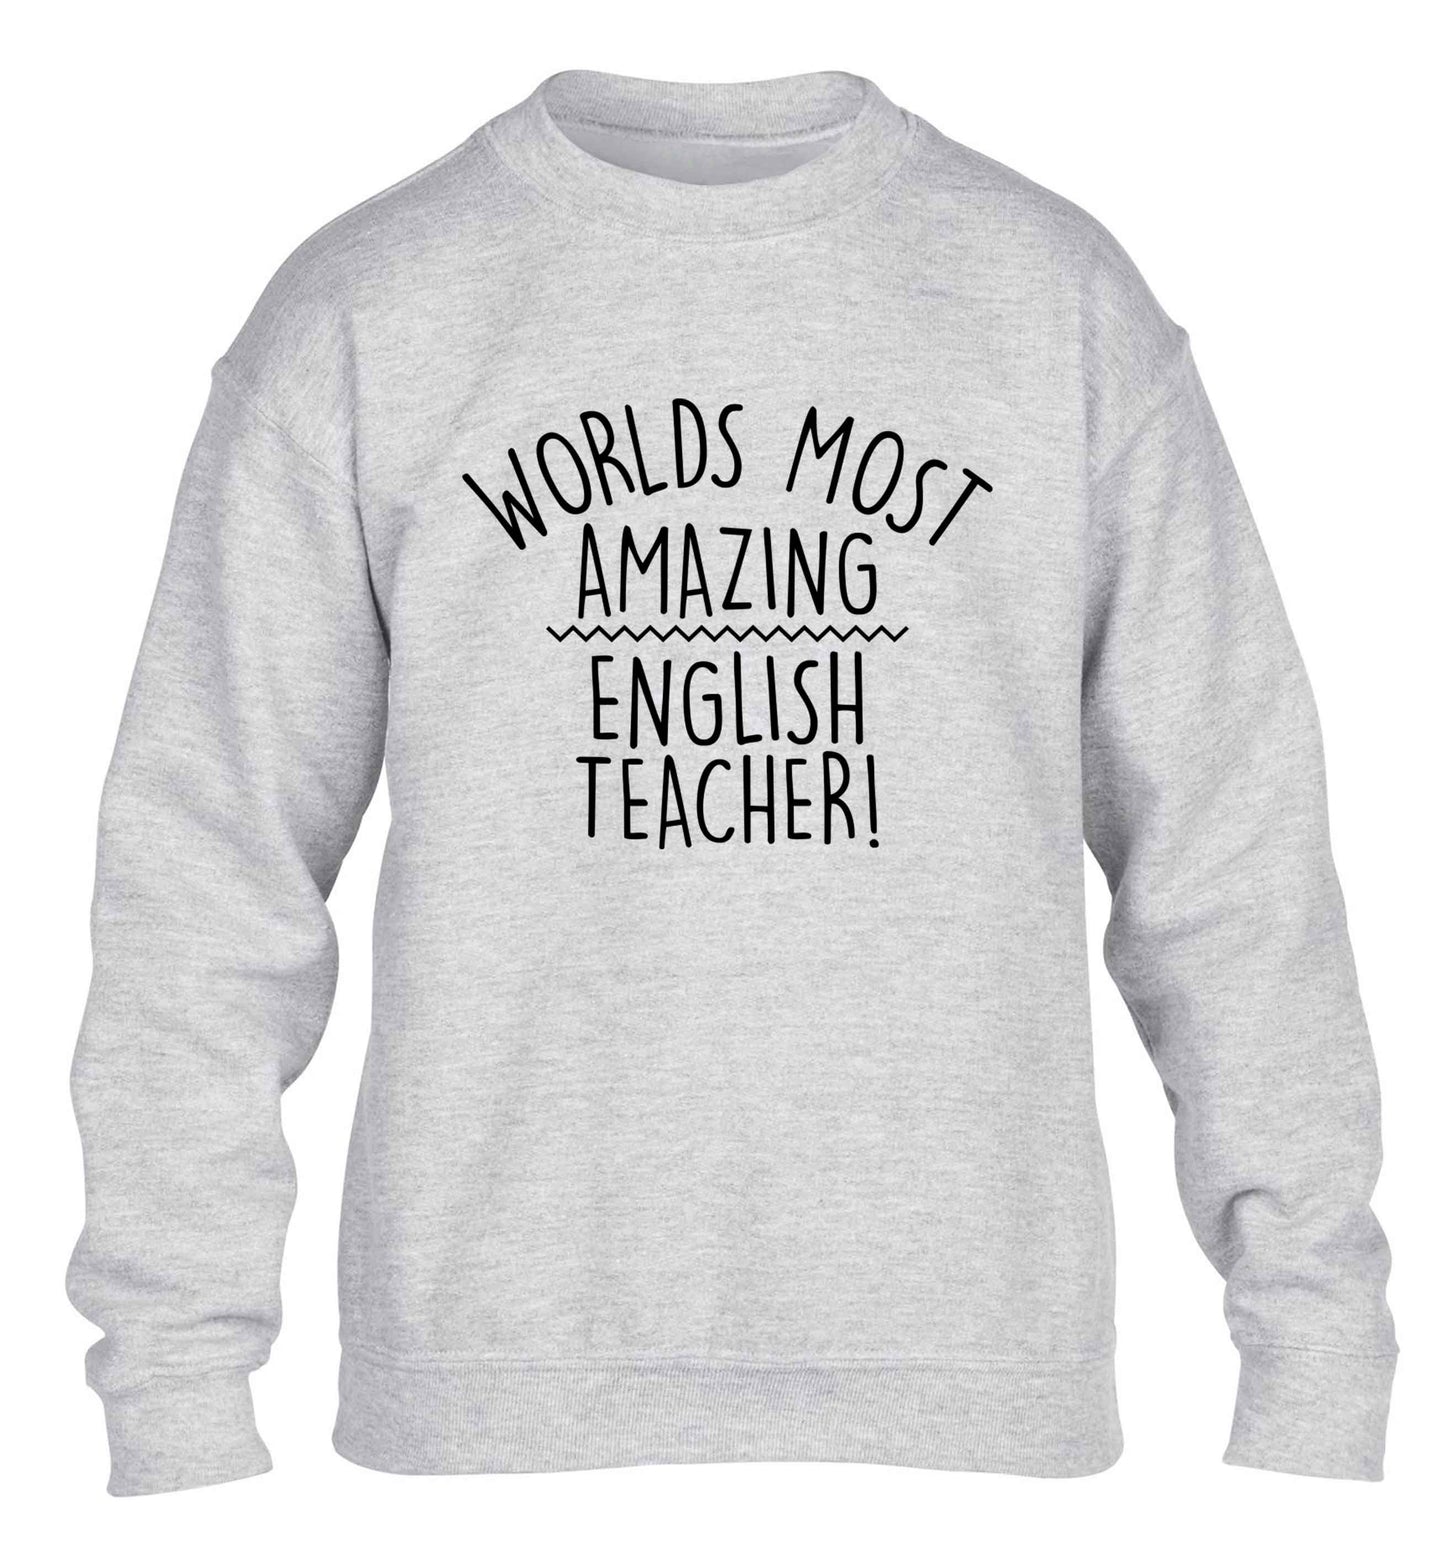 Worlds most amazing English teacher children's grey sweater 12-13 Years